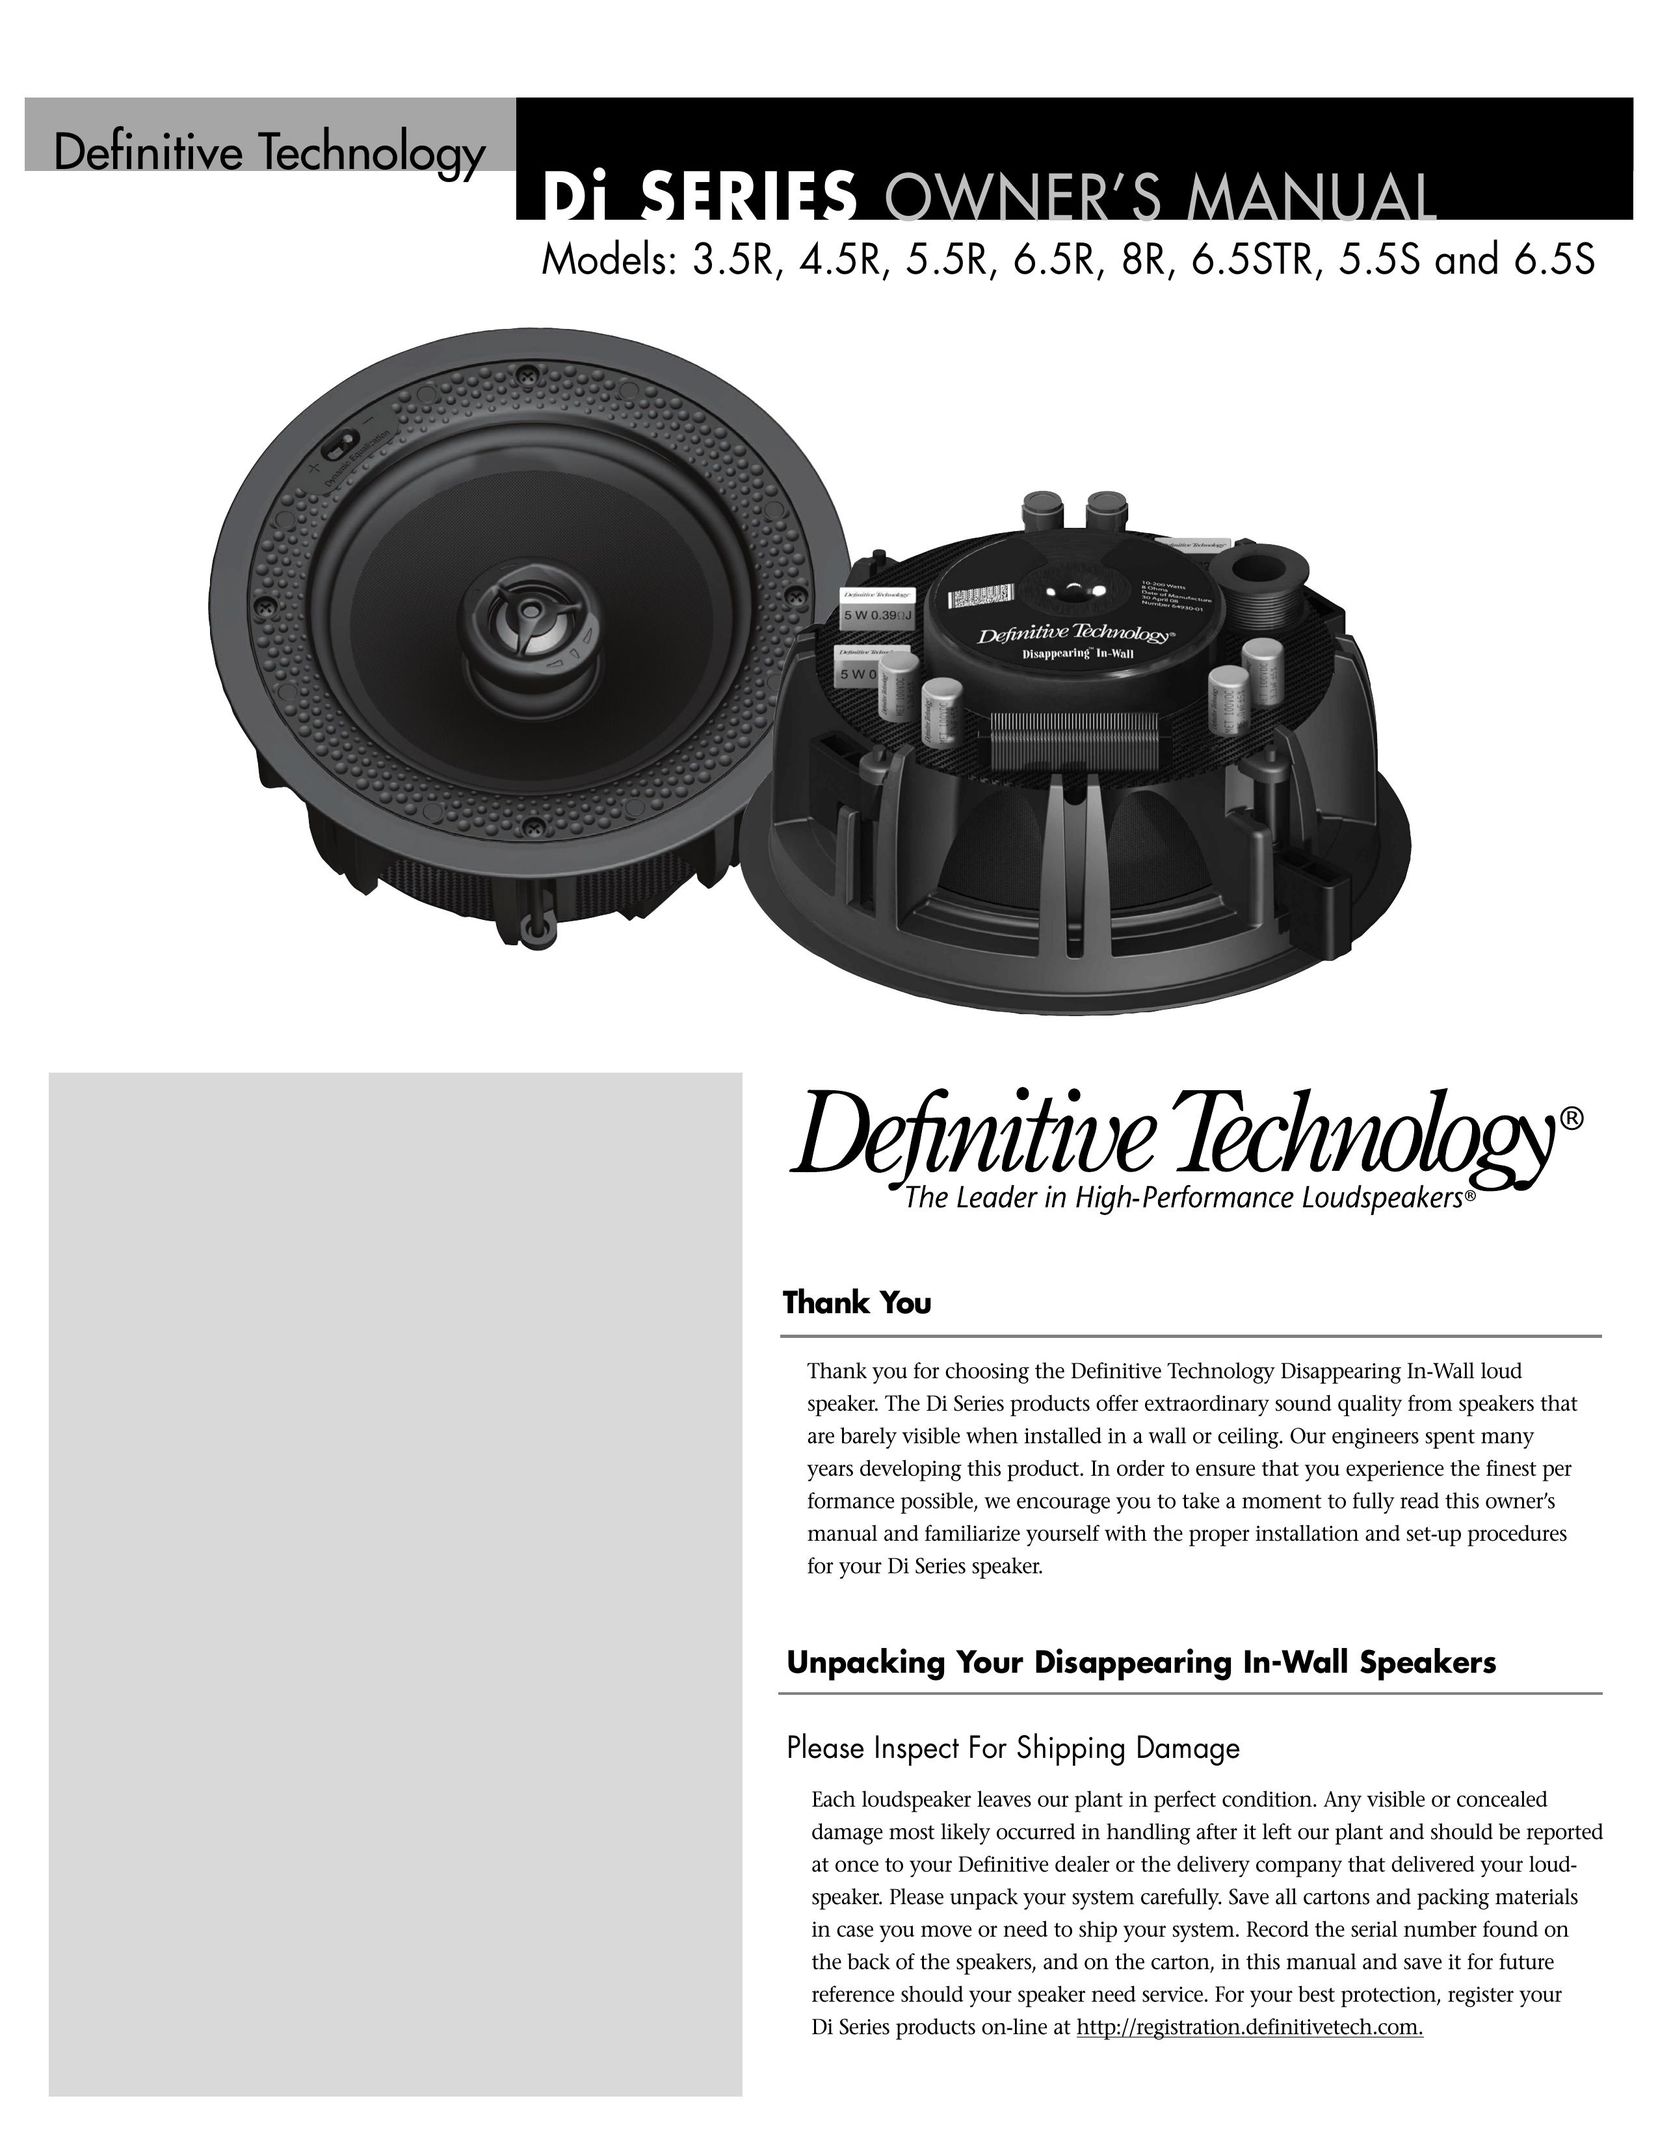 Definitive Technology 3.5R Speaker User Manual